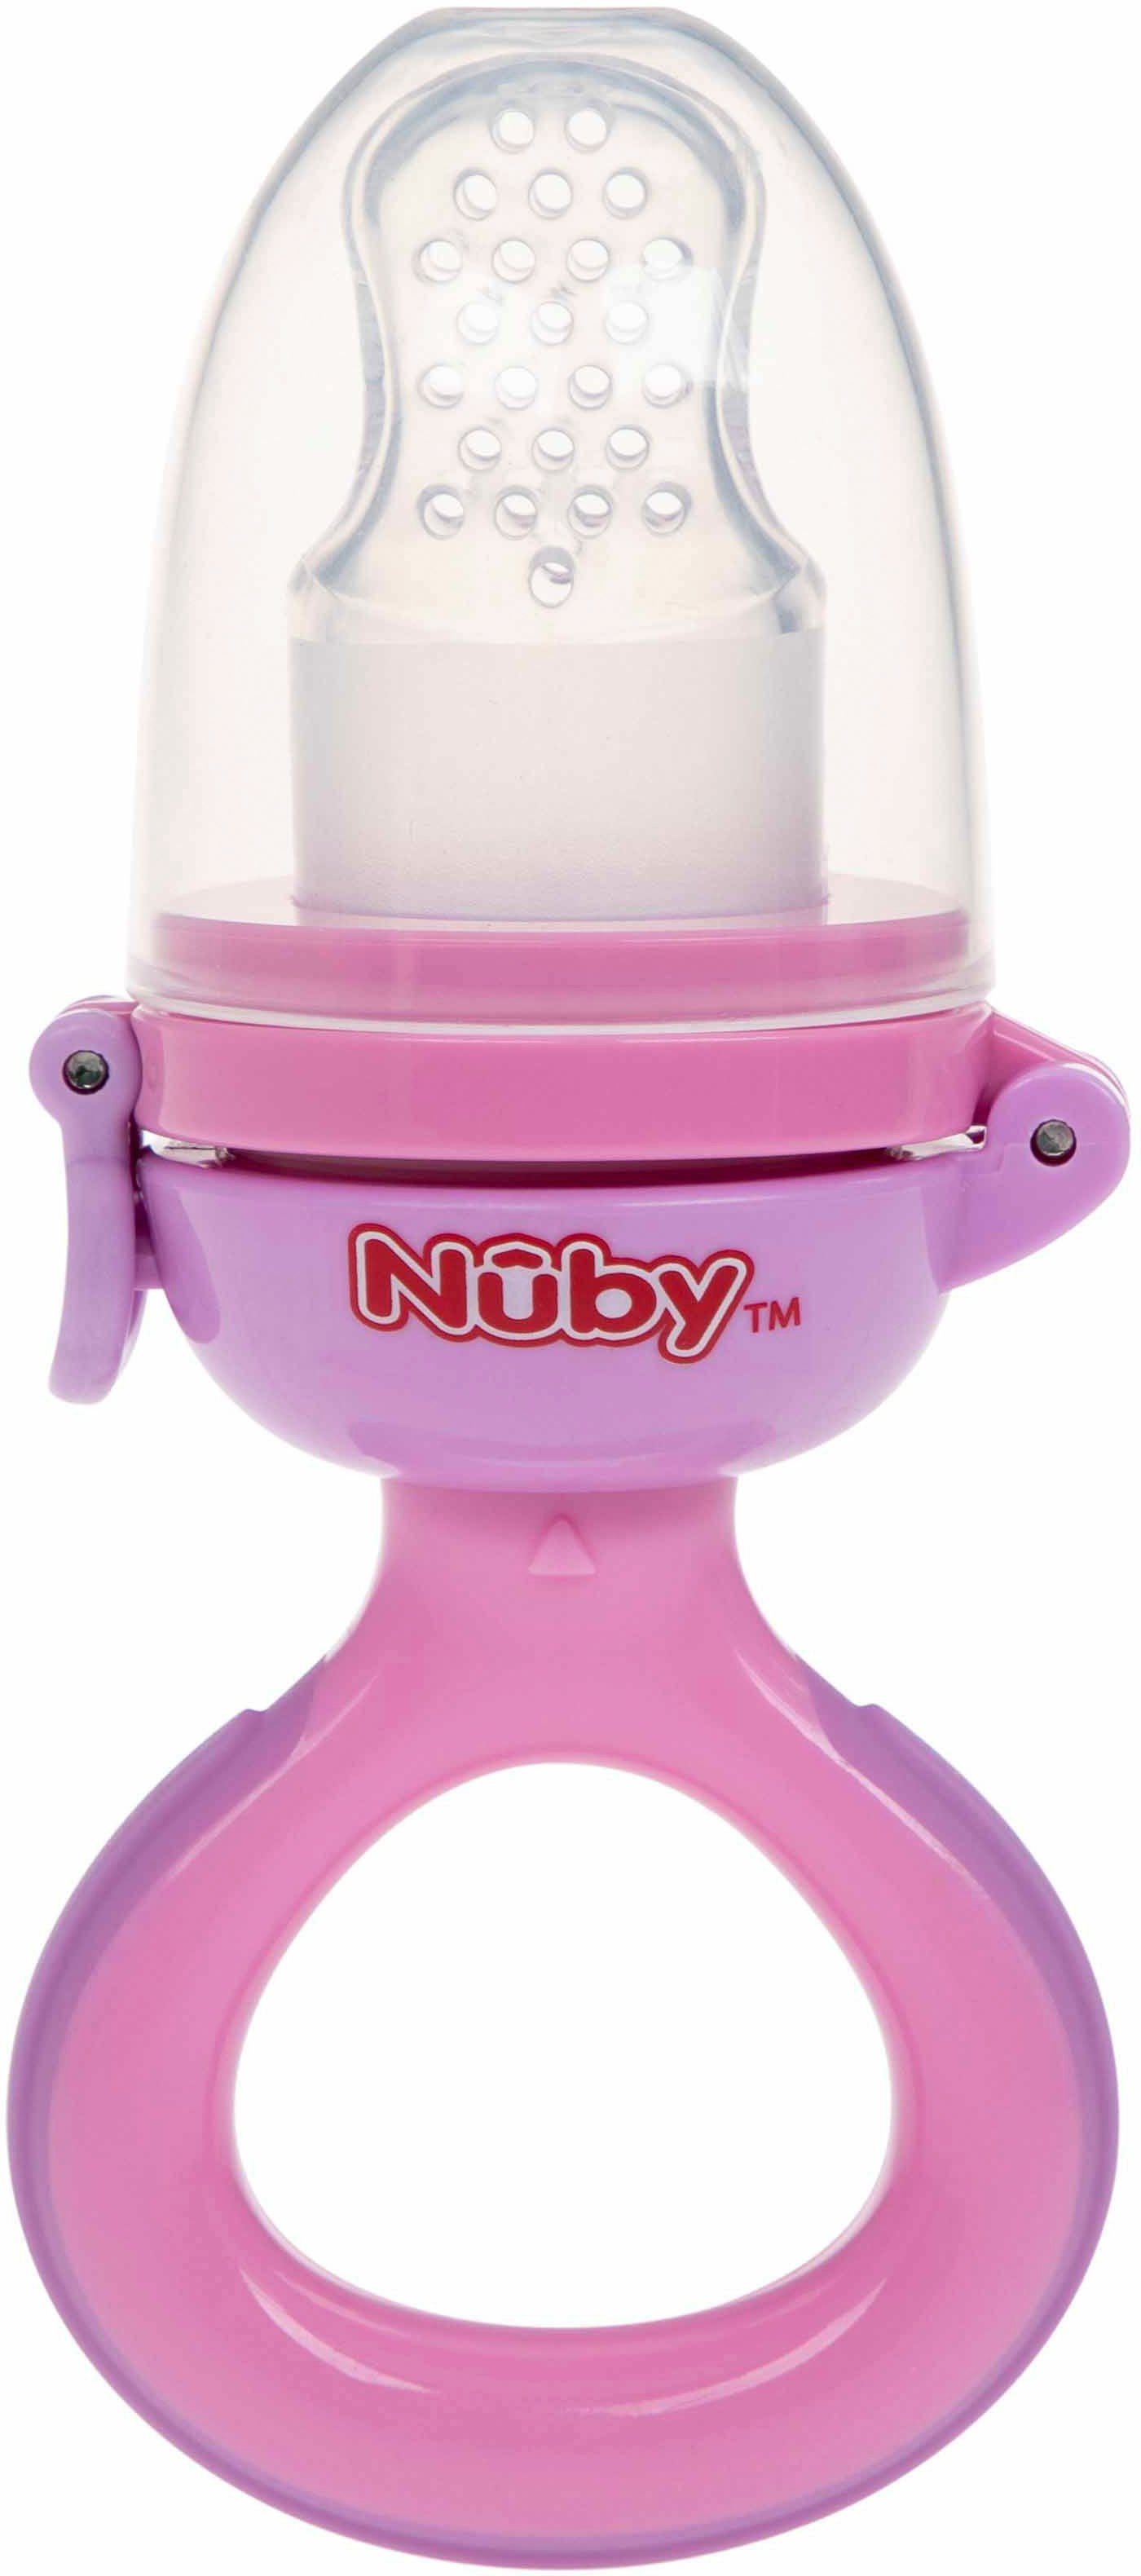 Nuby Online-Shop | OTTO